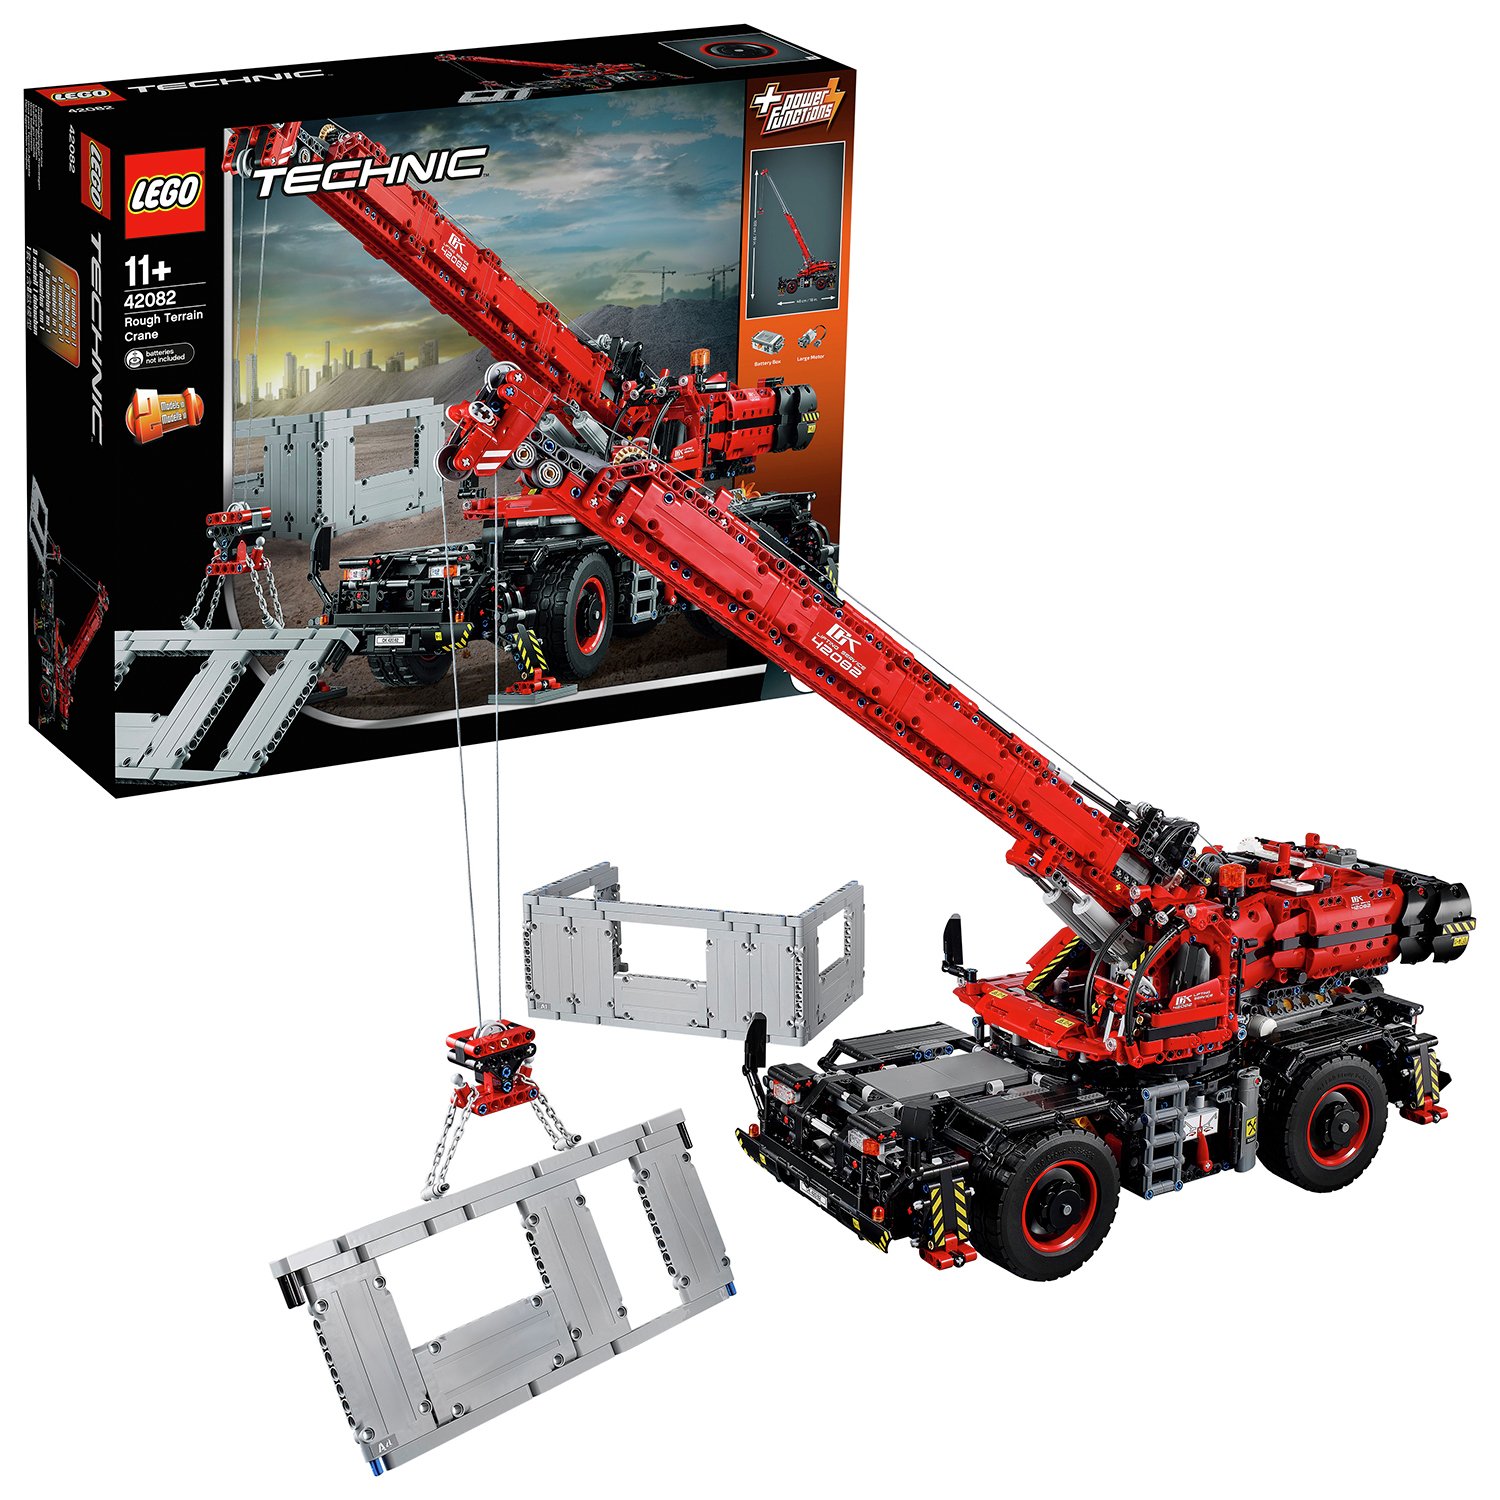 LEGO Technic Rough Terrain Crane 2 -in-1 Set Review